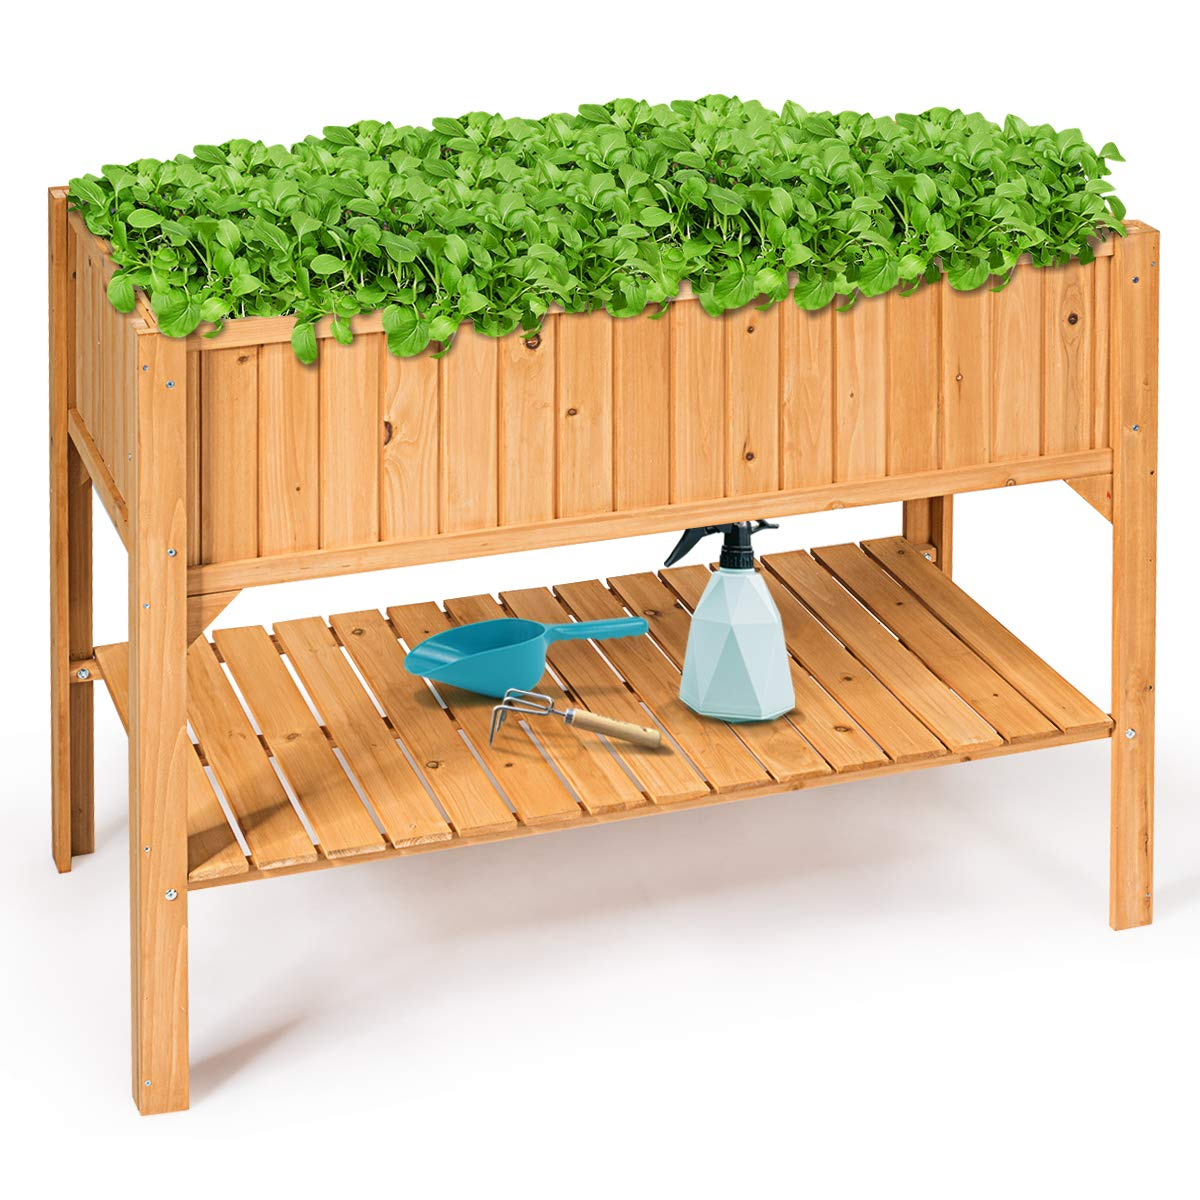 Raised Garden Planter Bed Box, 47" L x 22.5" W x 35.5" H